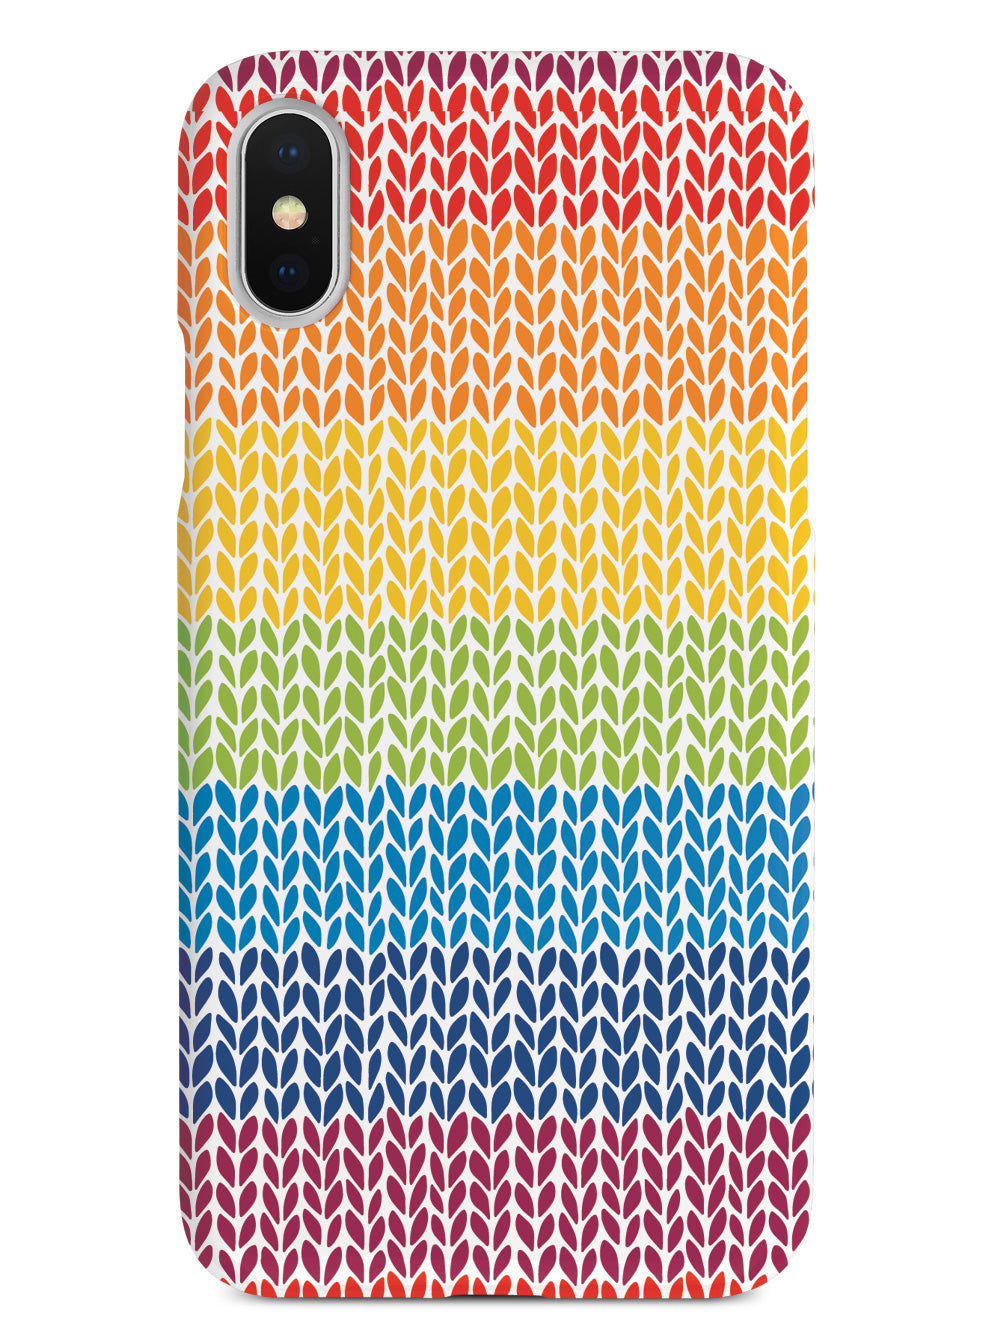 Rainbow Crochet Texture - White Case